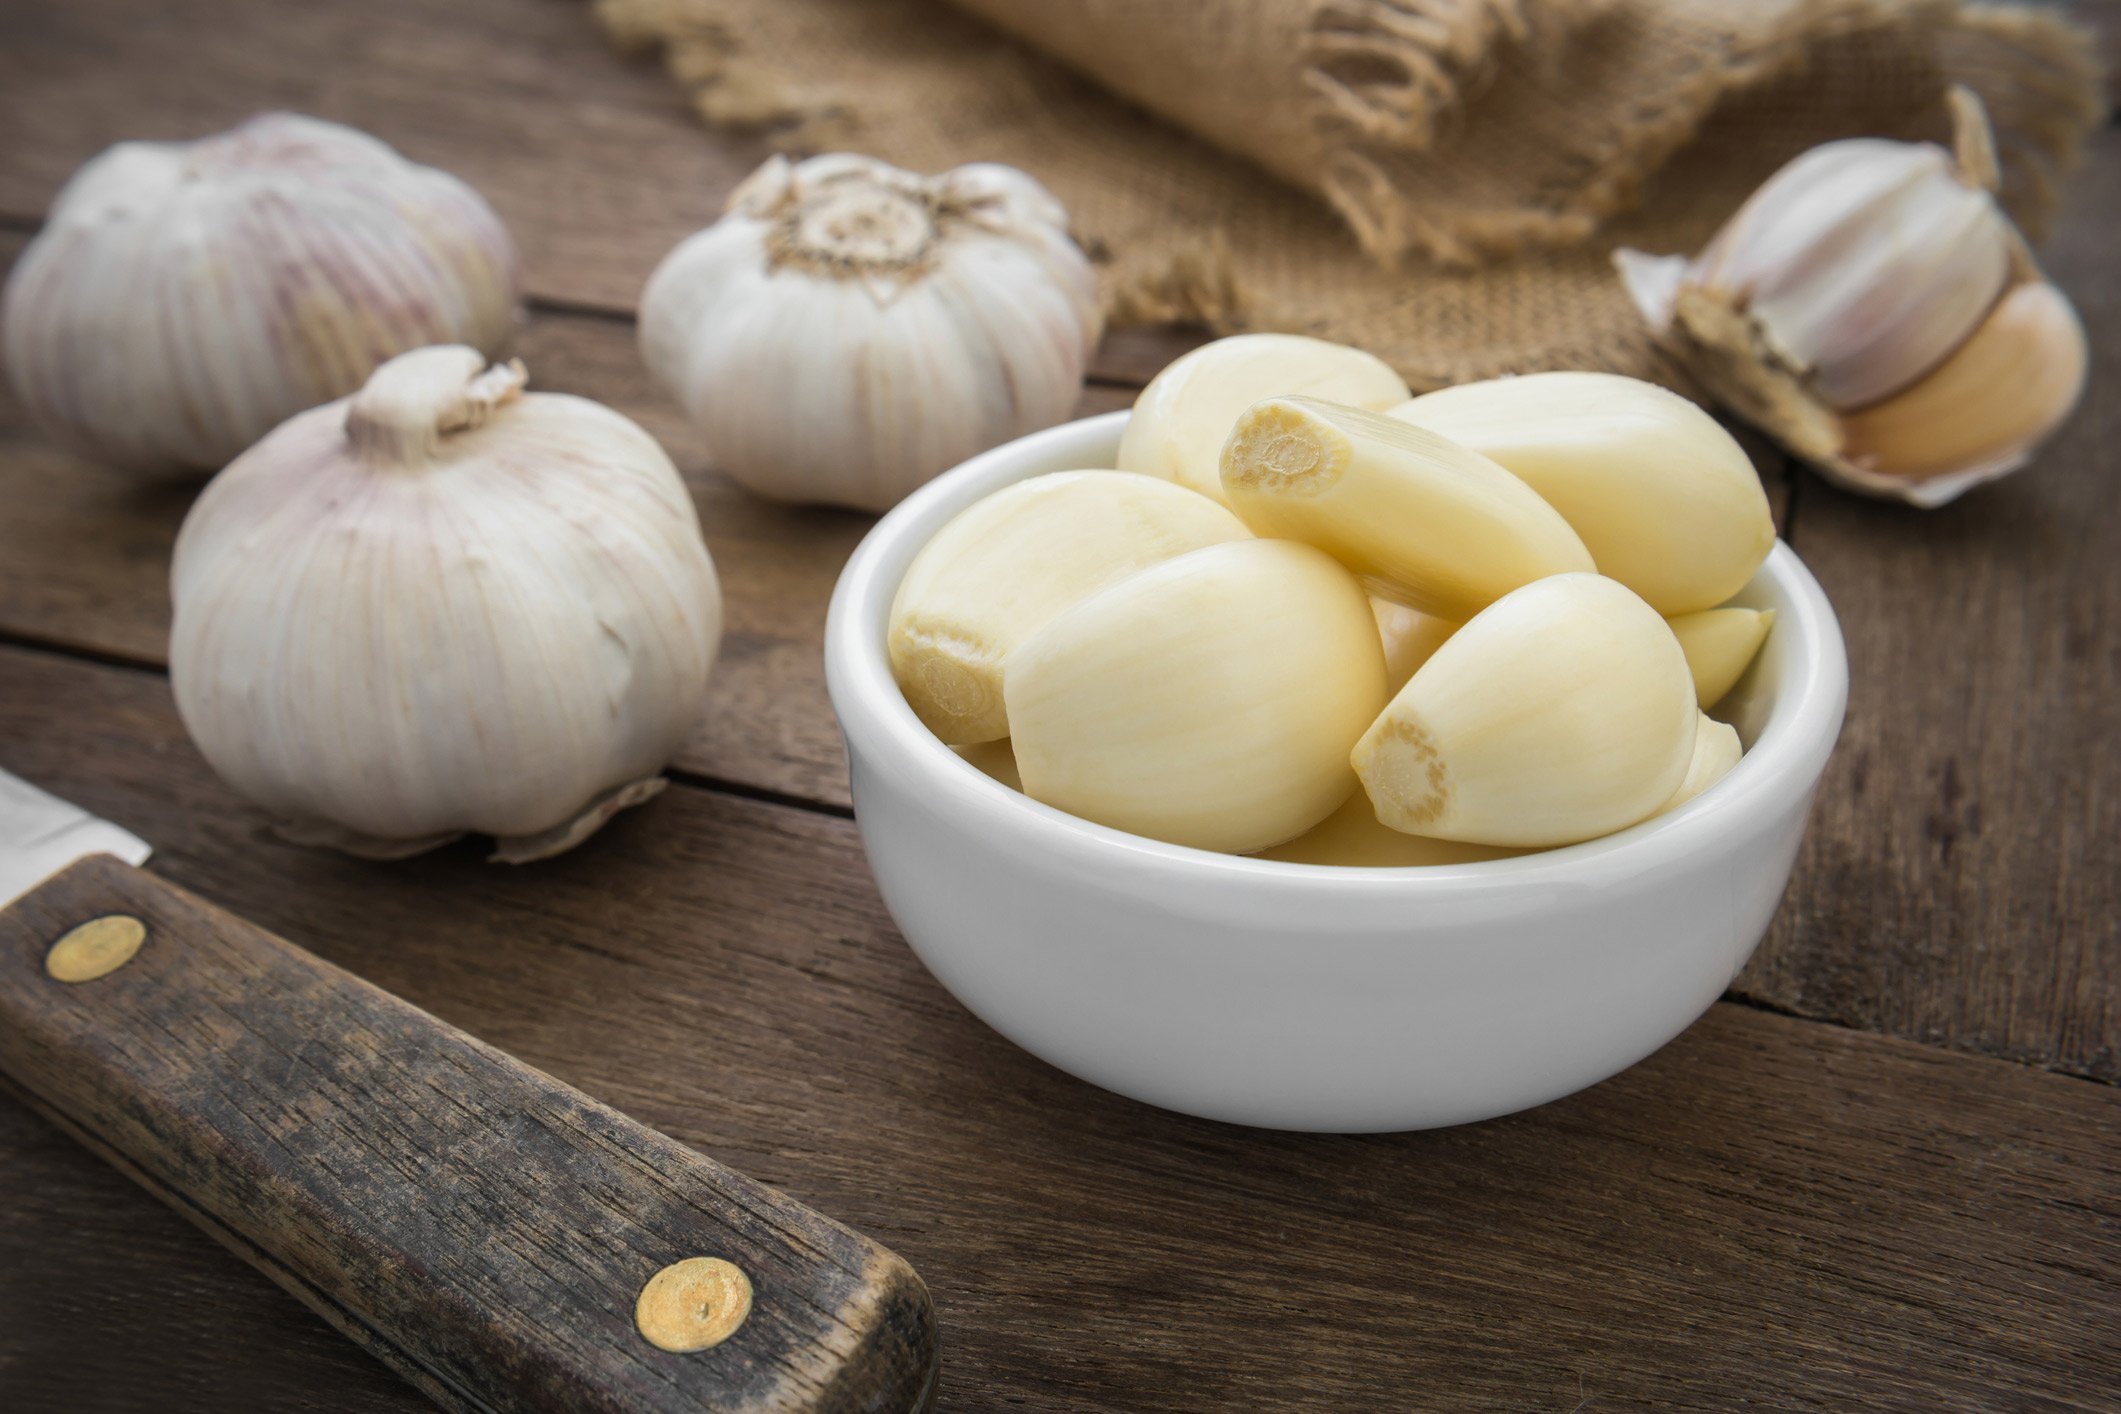 Top detoxifying foods: Garlic